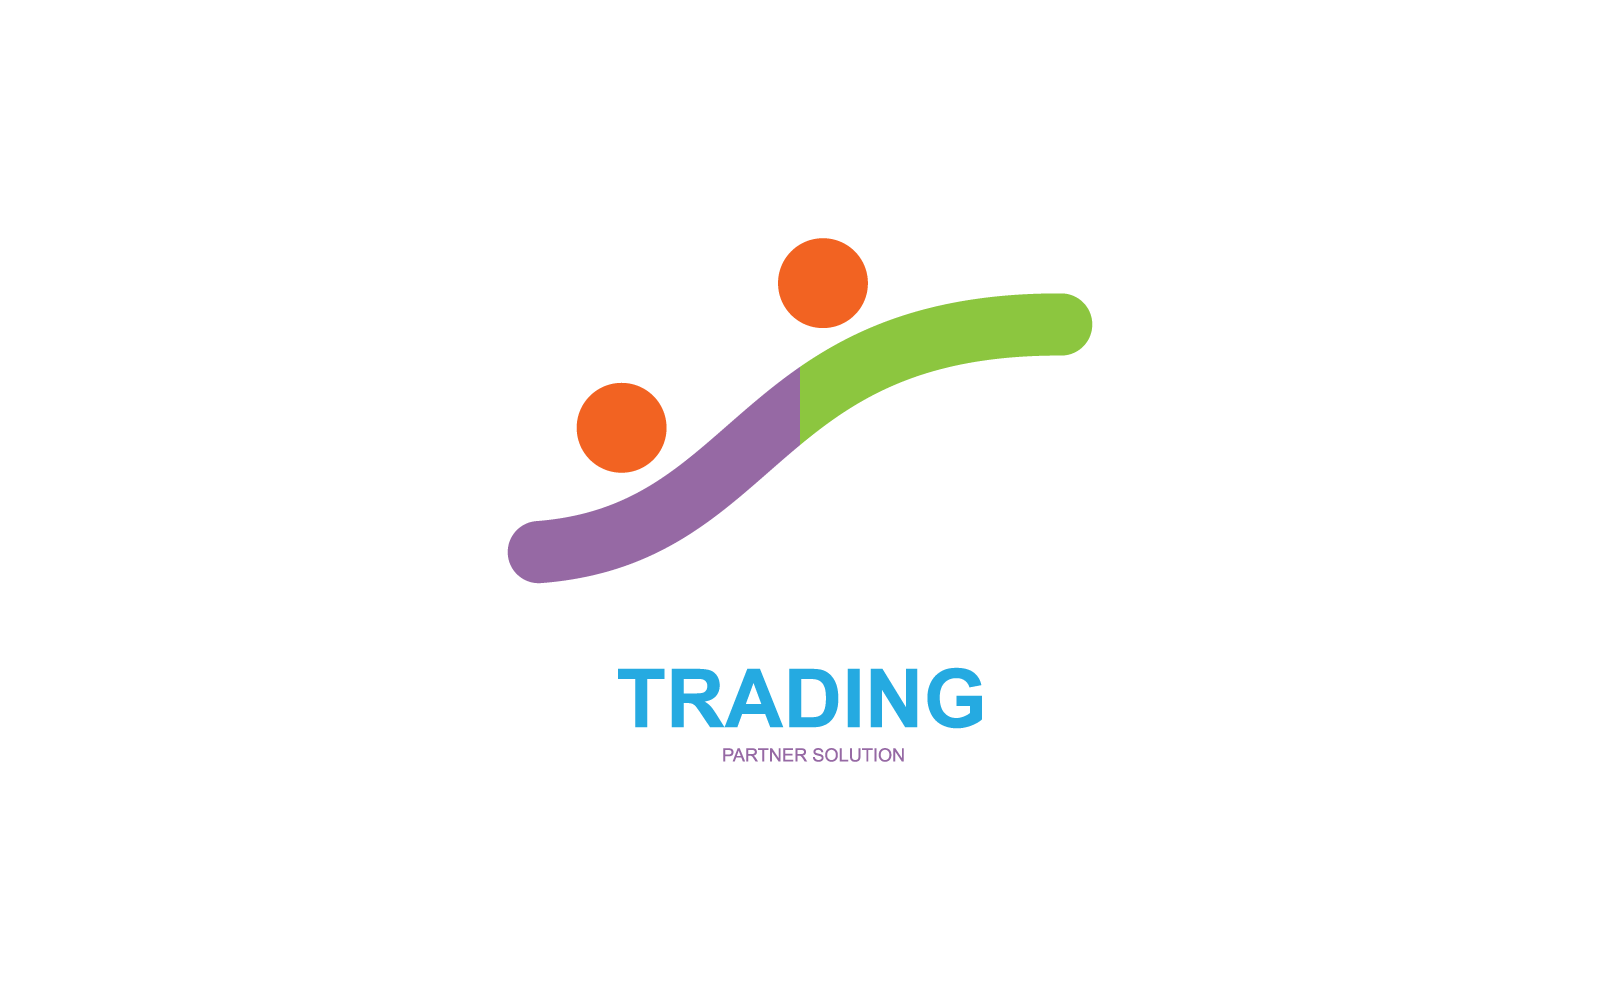 Business Trading logo vector illustration template